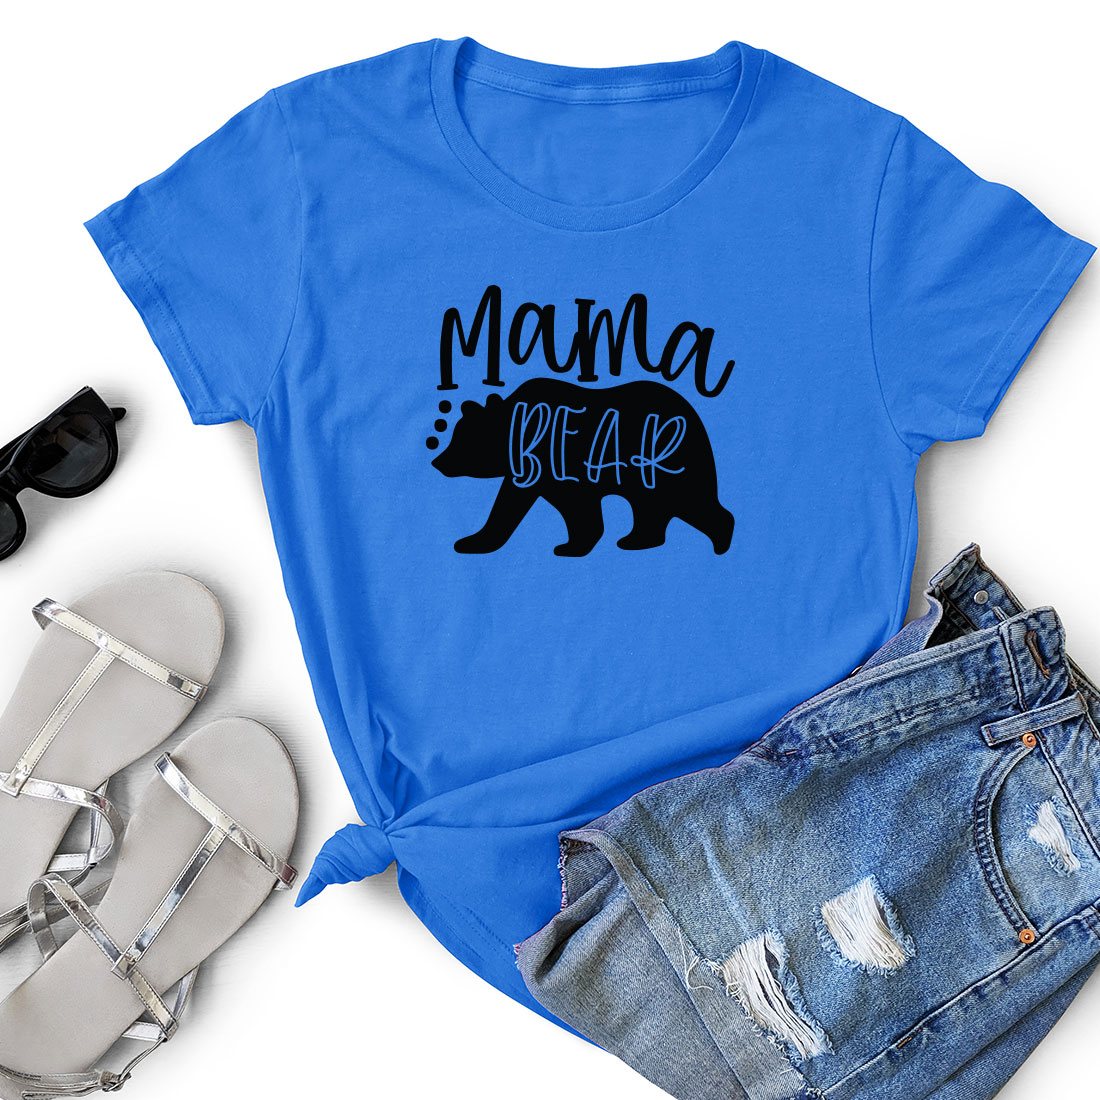 Blue shirt that says mama bear next to a pair of shorts.